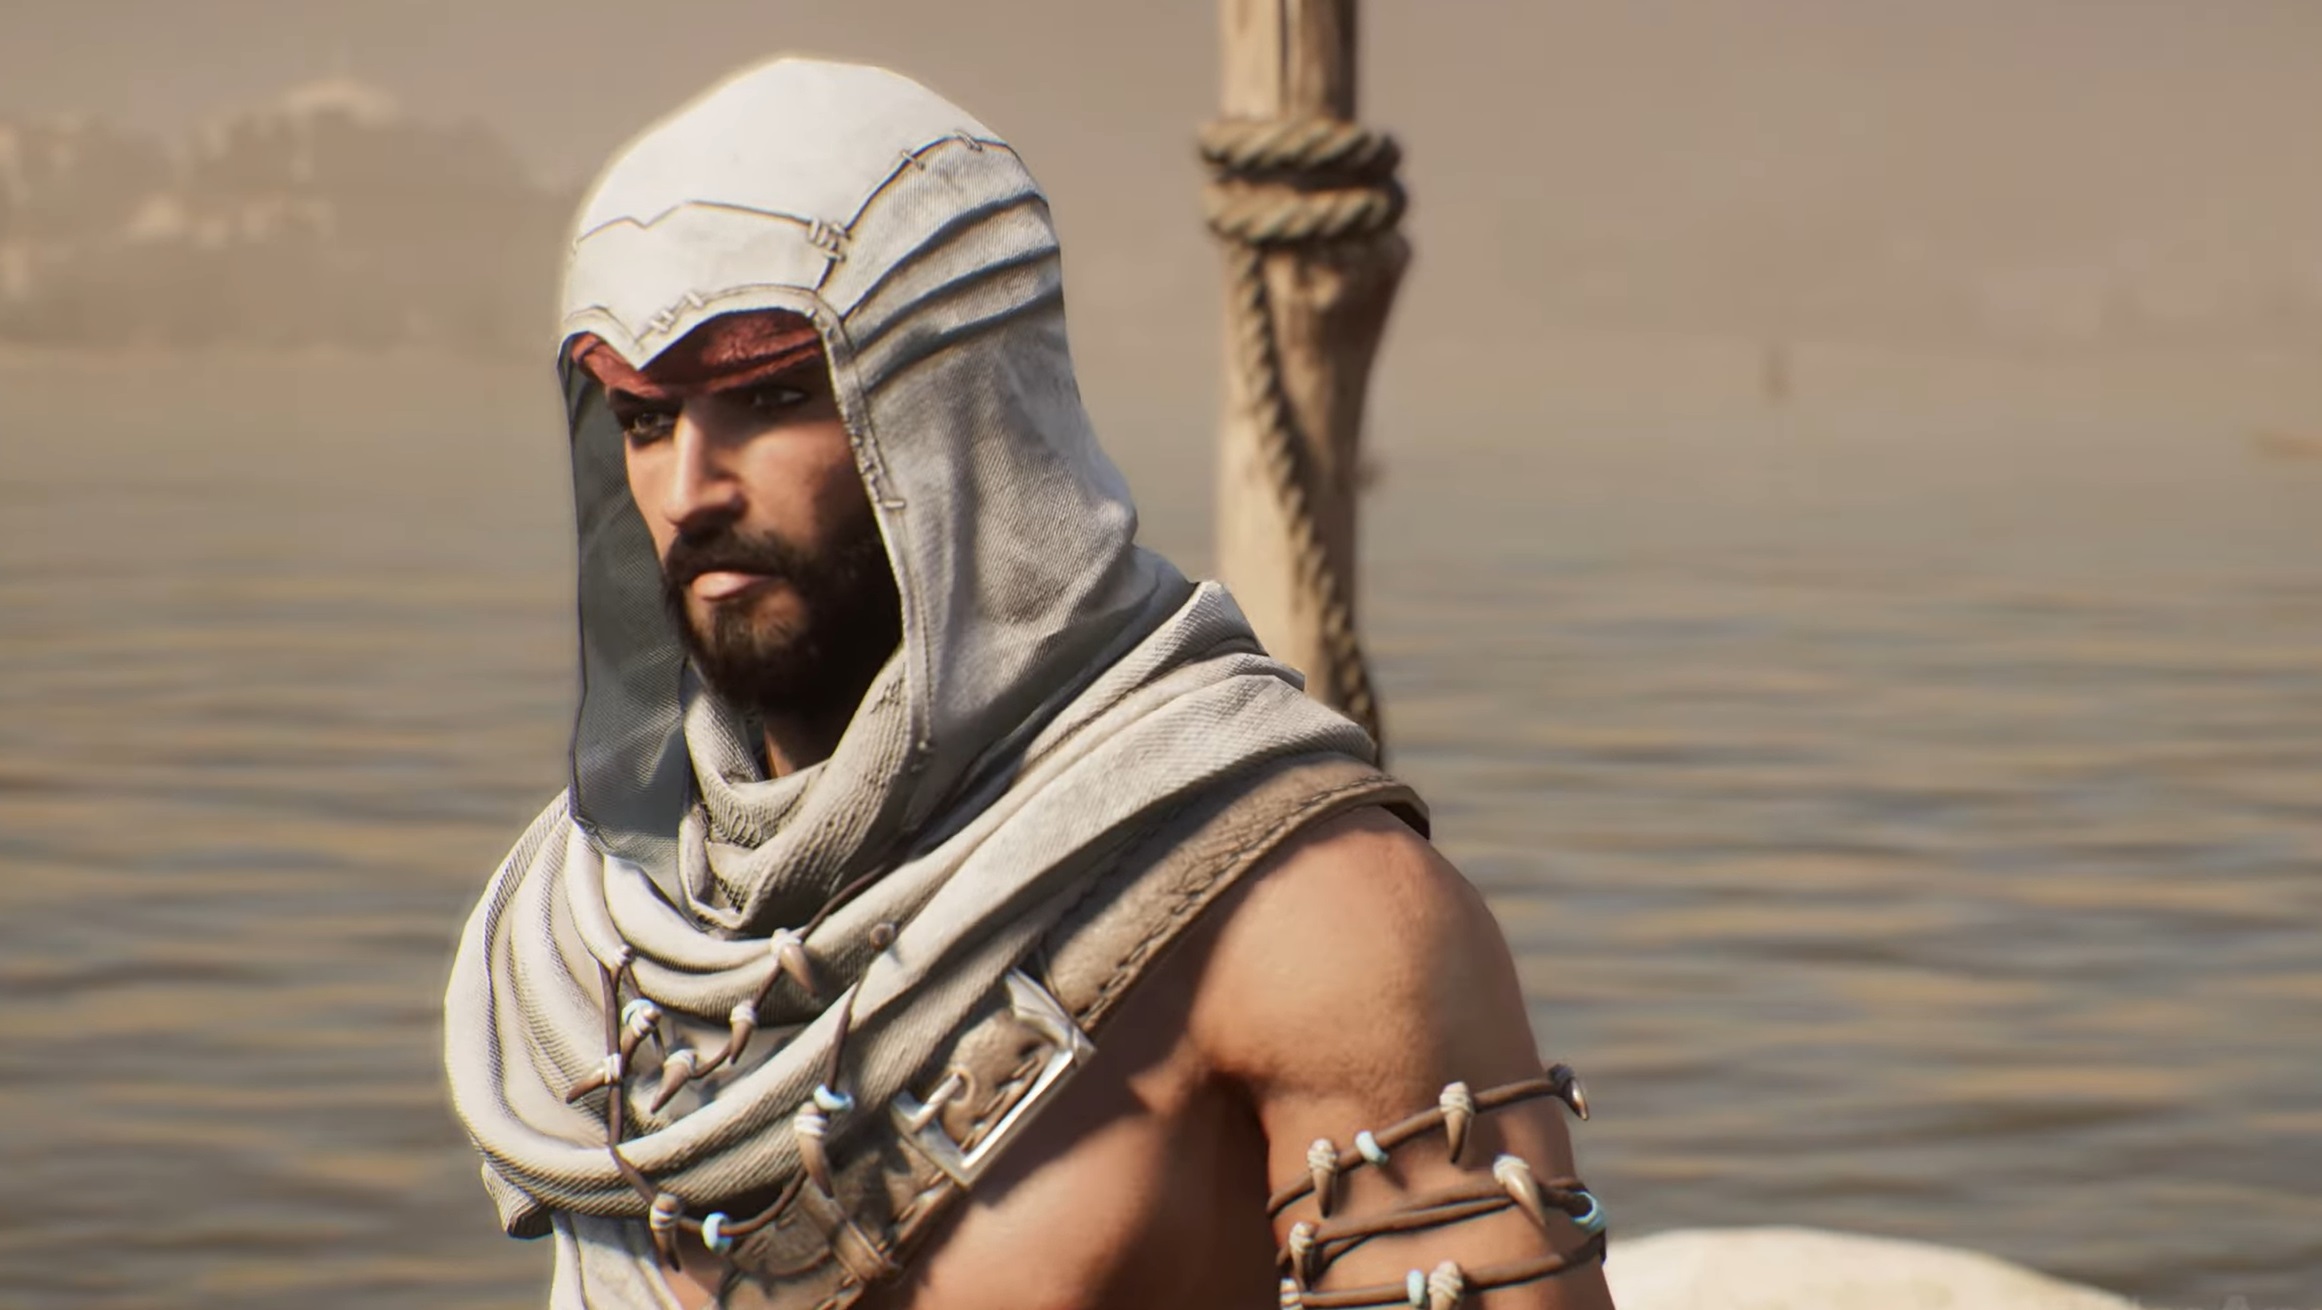 Assassin's Creed Mirage bổ sung chế độ permadeath đầy thử thách